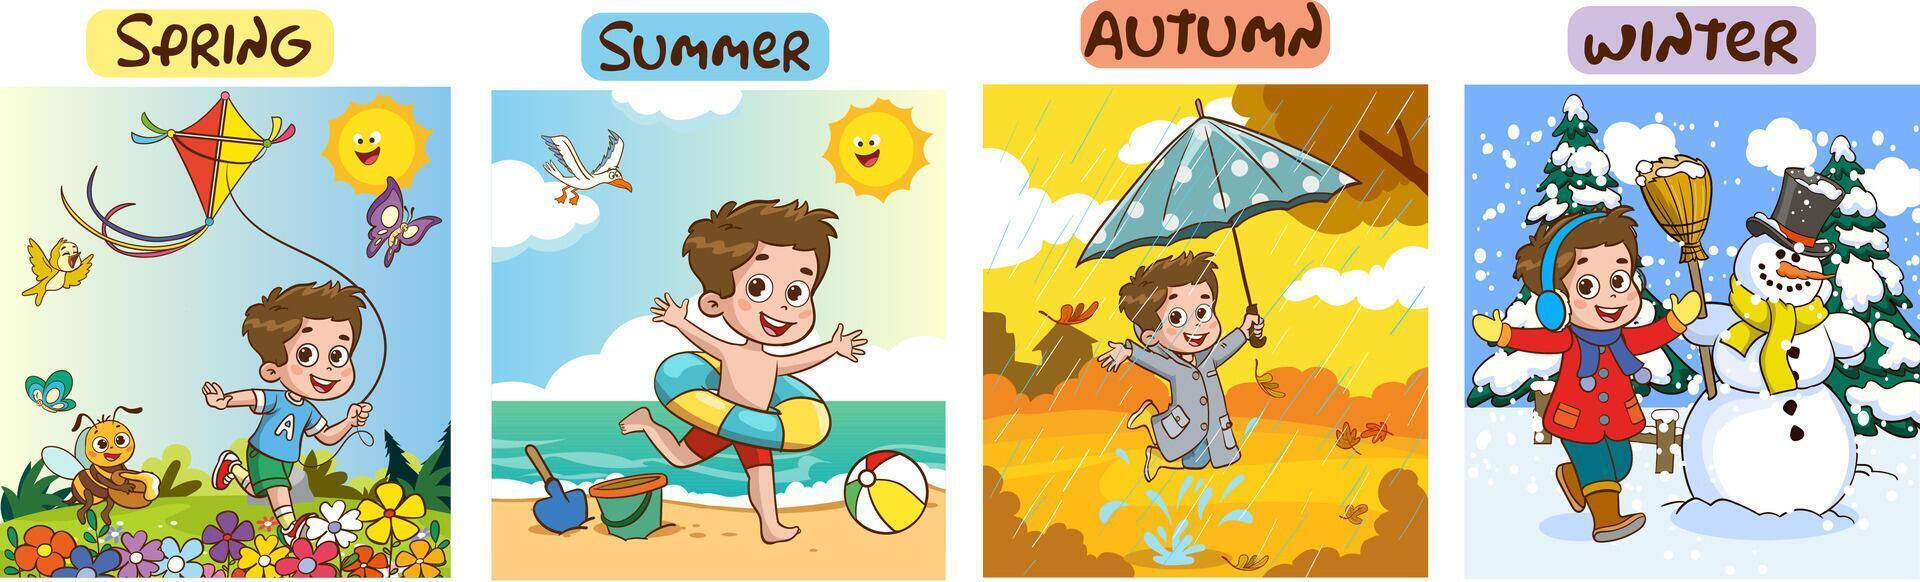 vektor illustration av fyra säsonger med tecknad serie unge